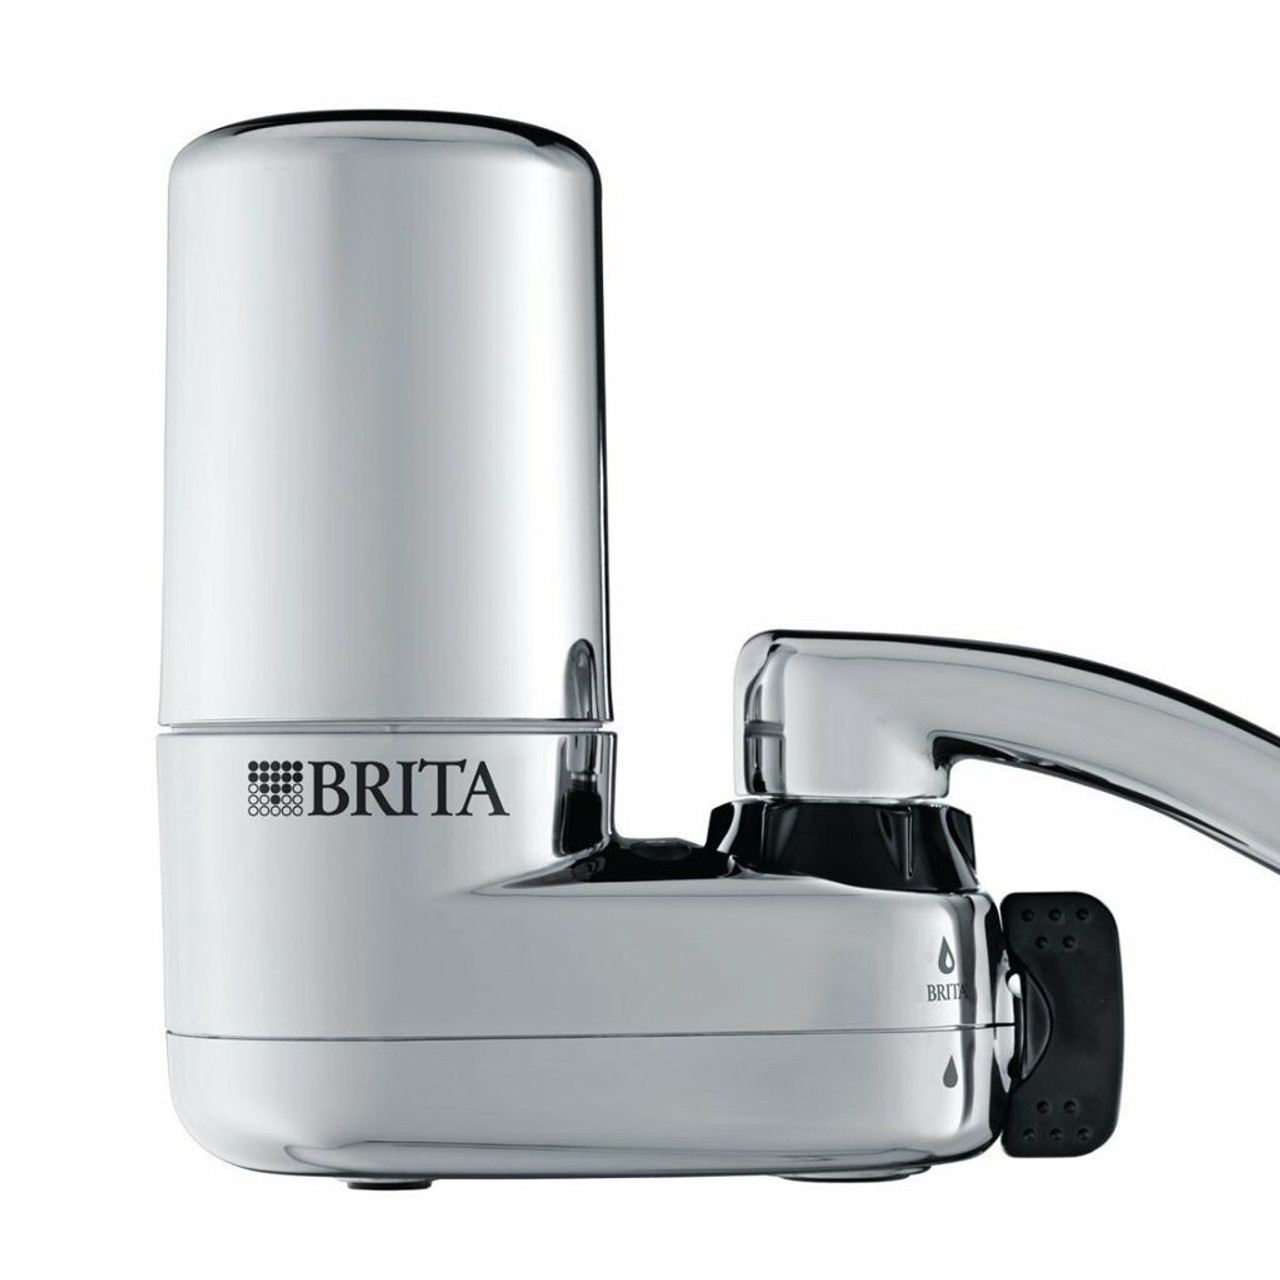 BRITA On Tap Advanced Filter System